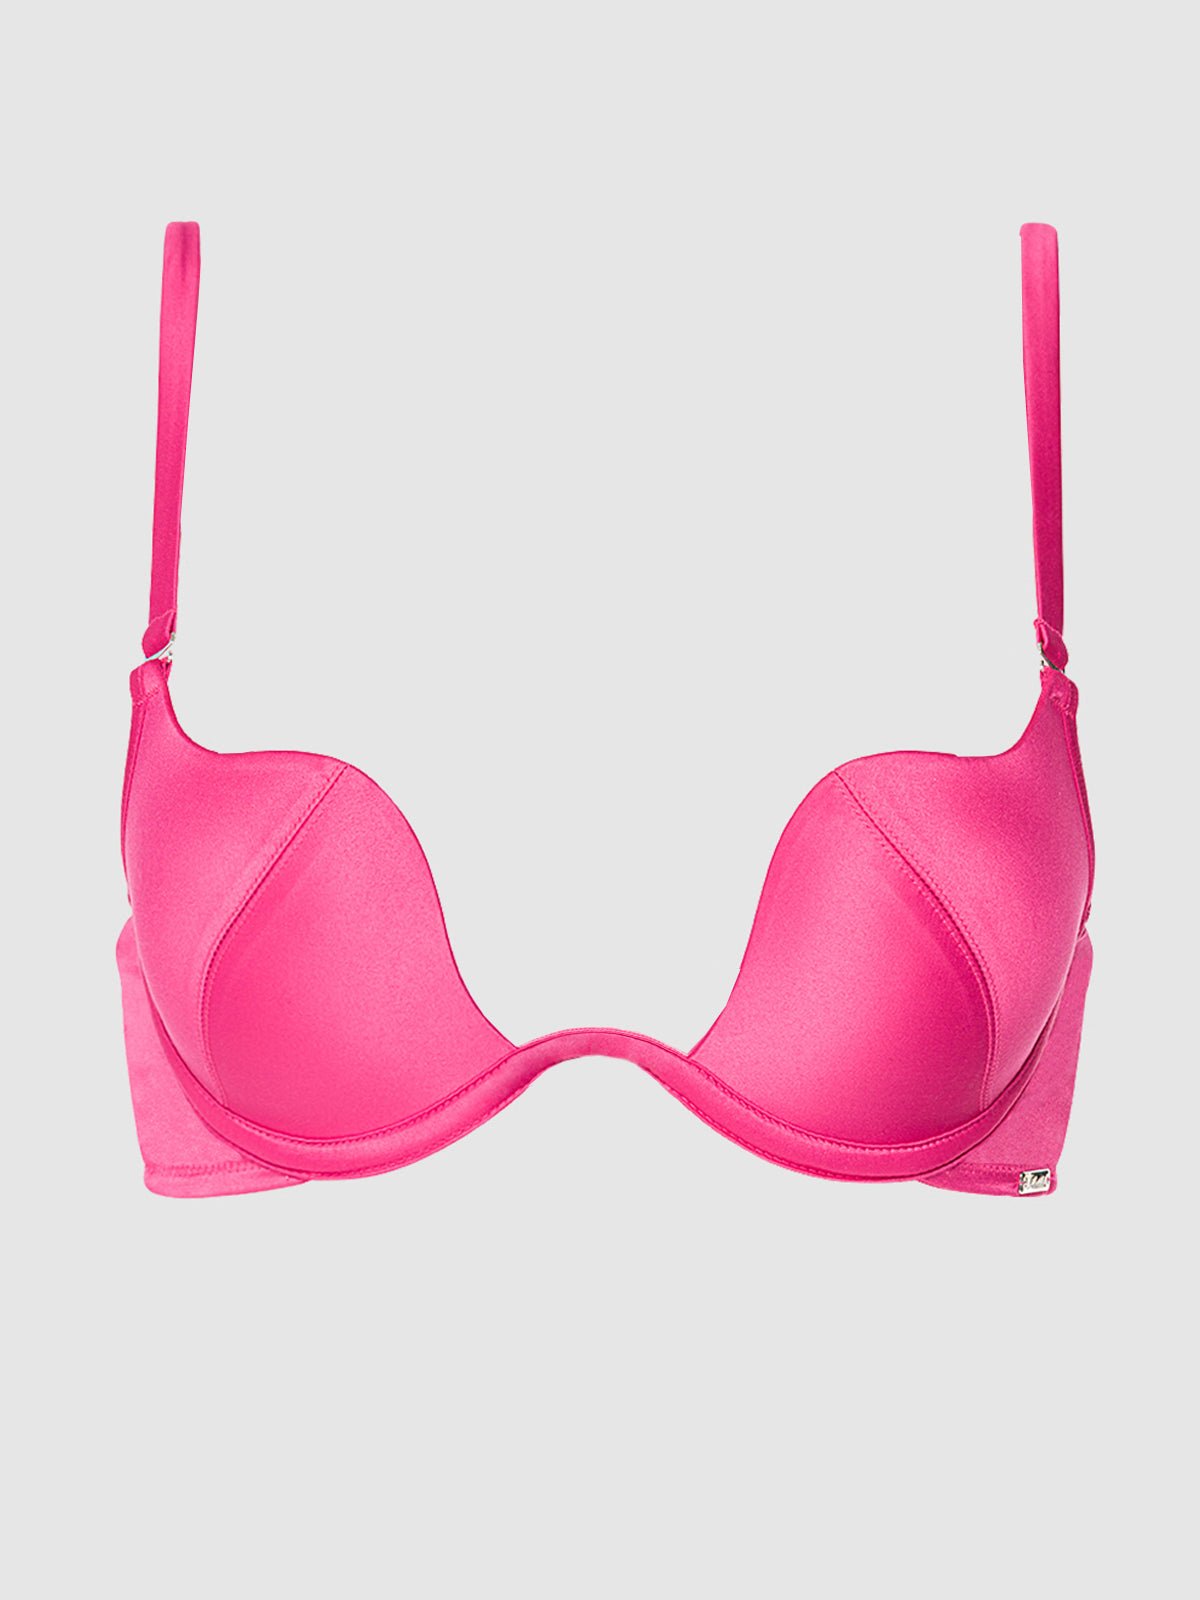 PINK Victoria's Secret, Intimates & Sleepwear, Pink Push Up Bra Small